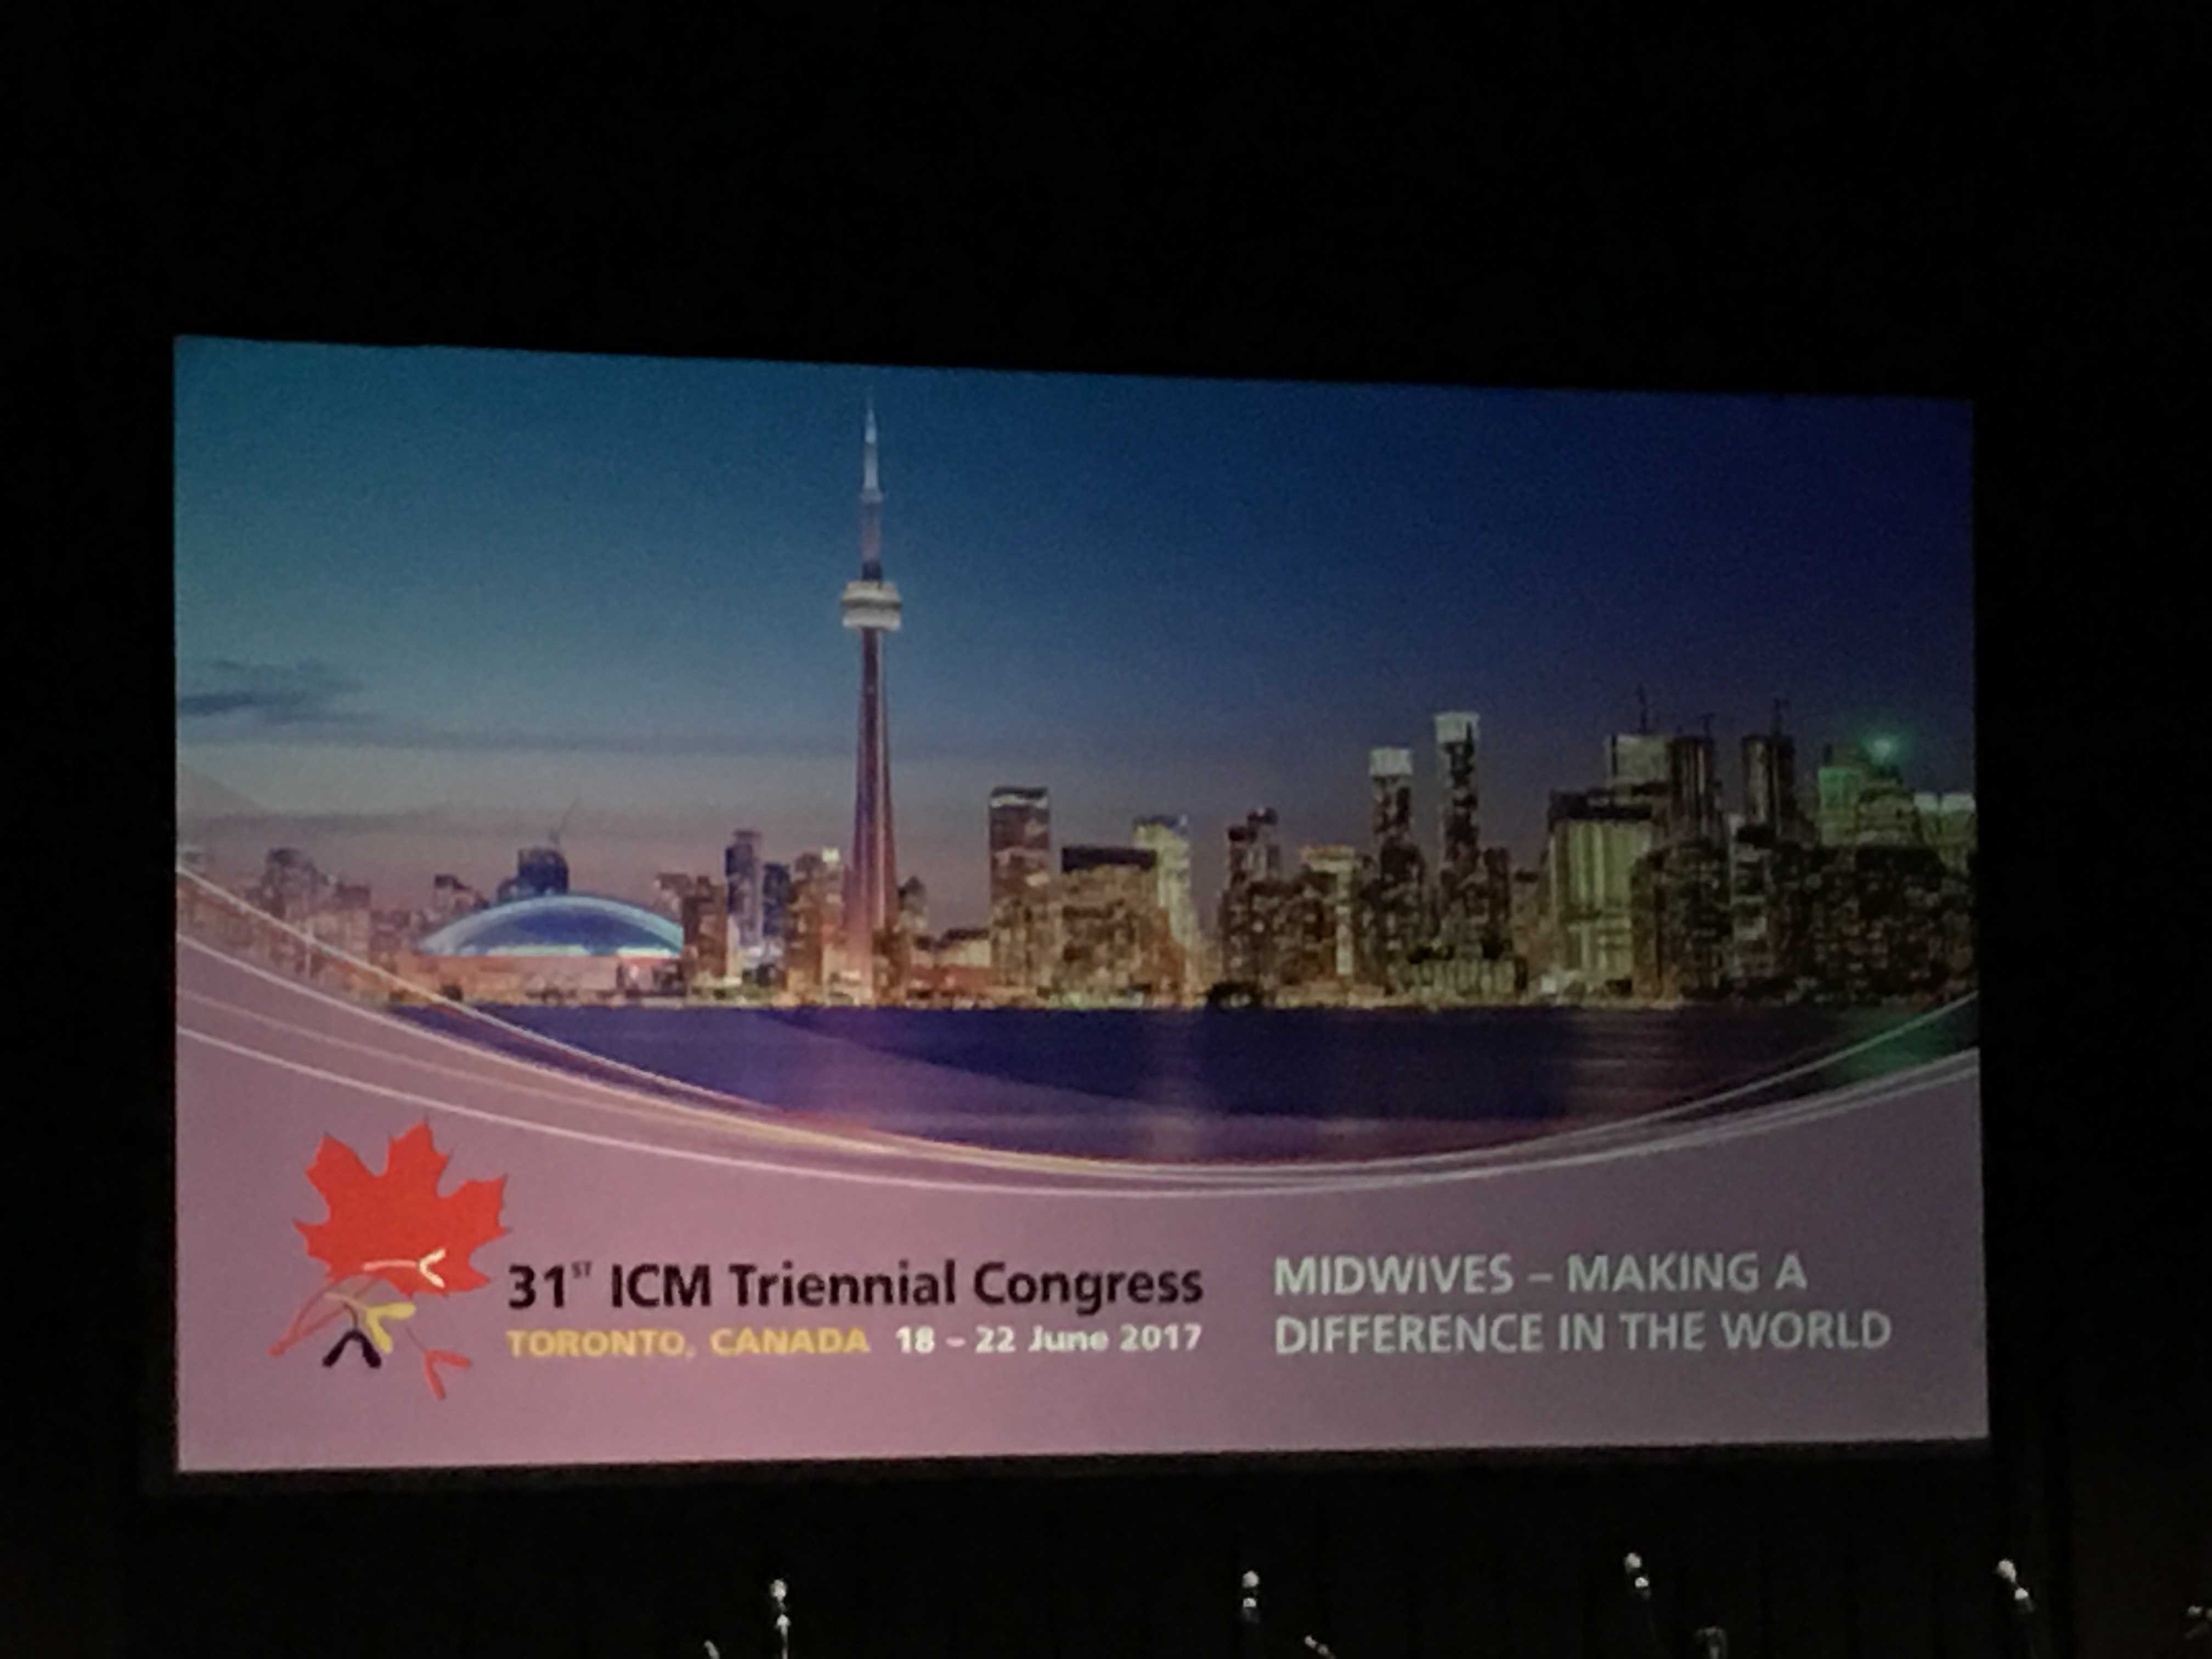 31st ICM Triennial Congress Toronto, Canada